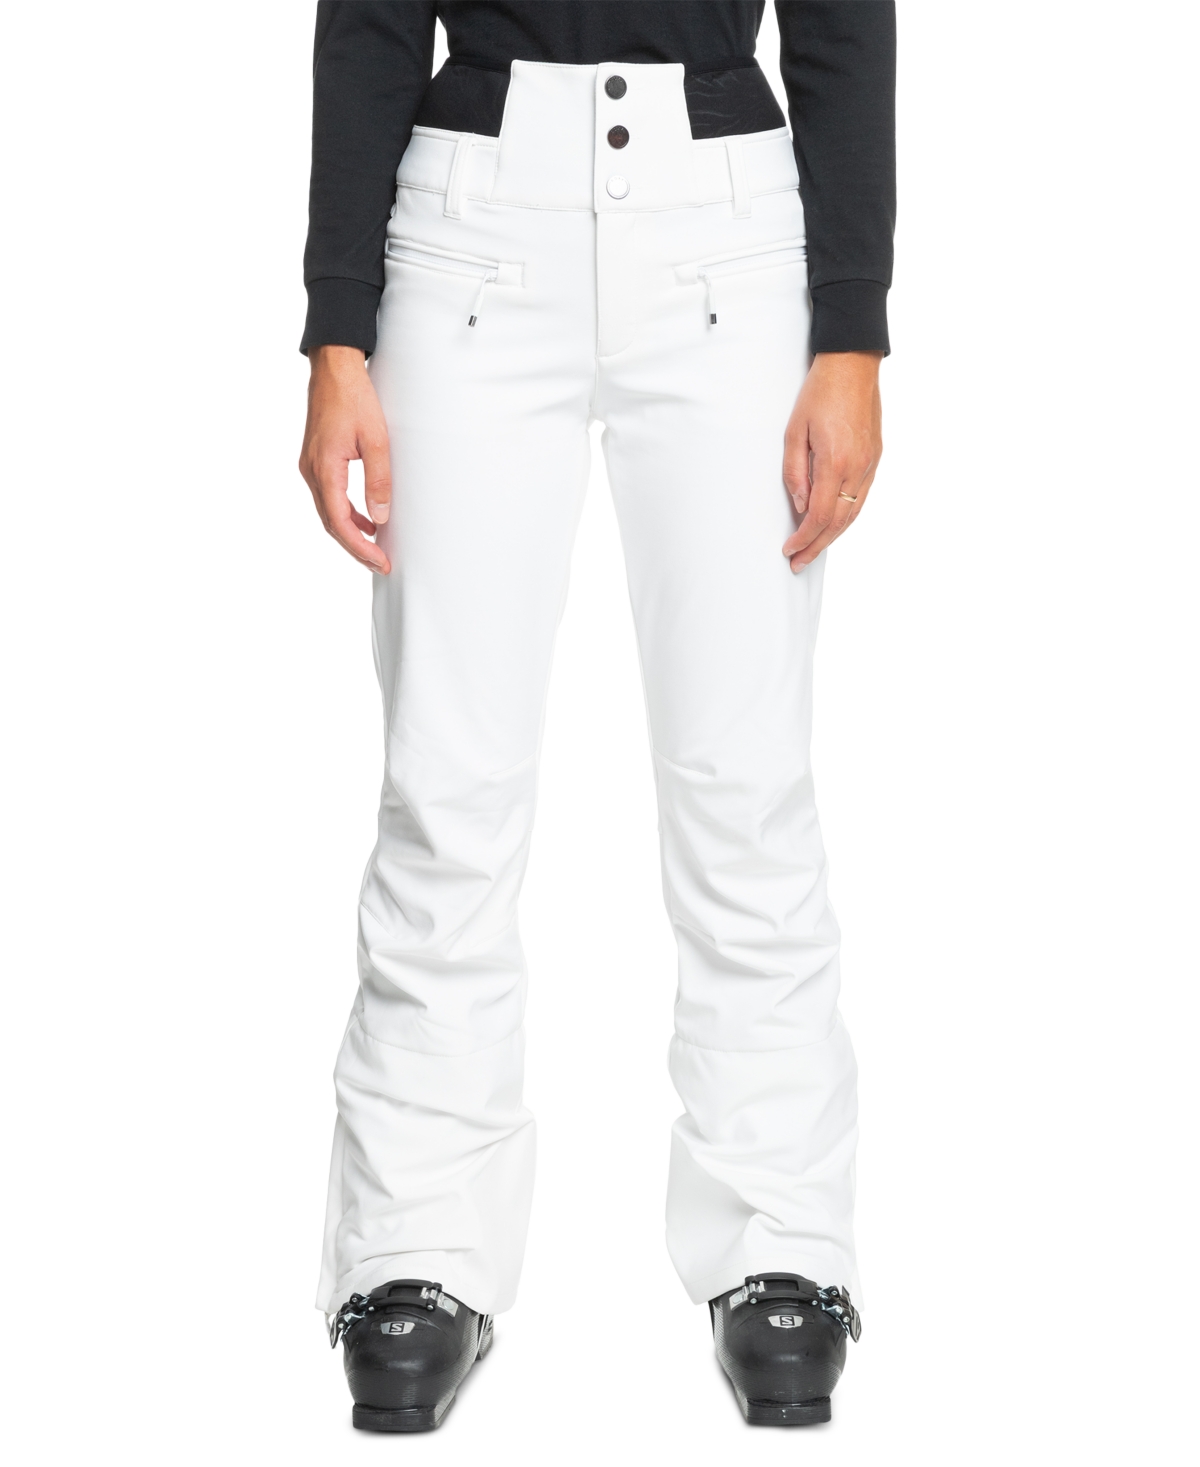 ROWLEY X ROXY Fuseau Technical Snow Pants - True Black Multifloral